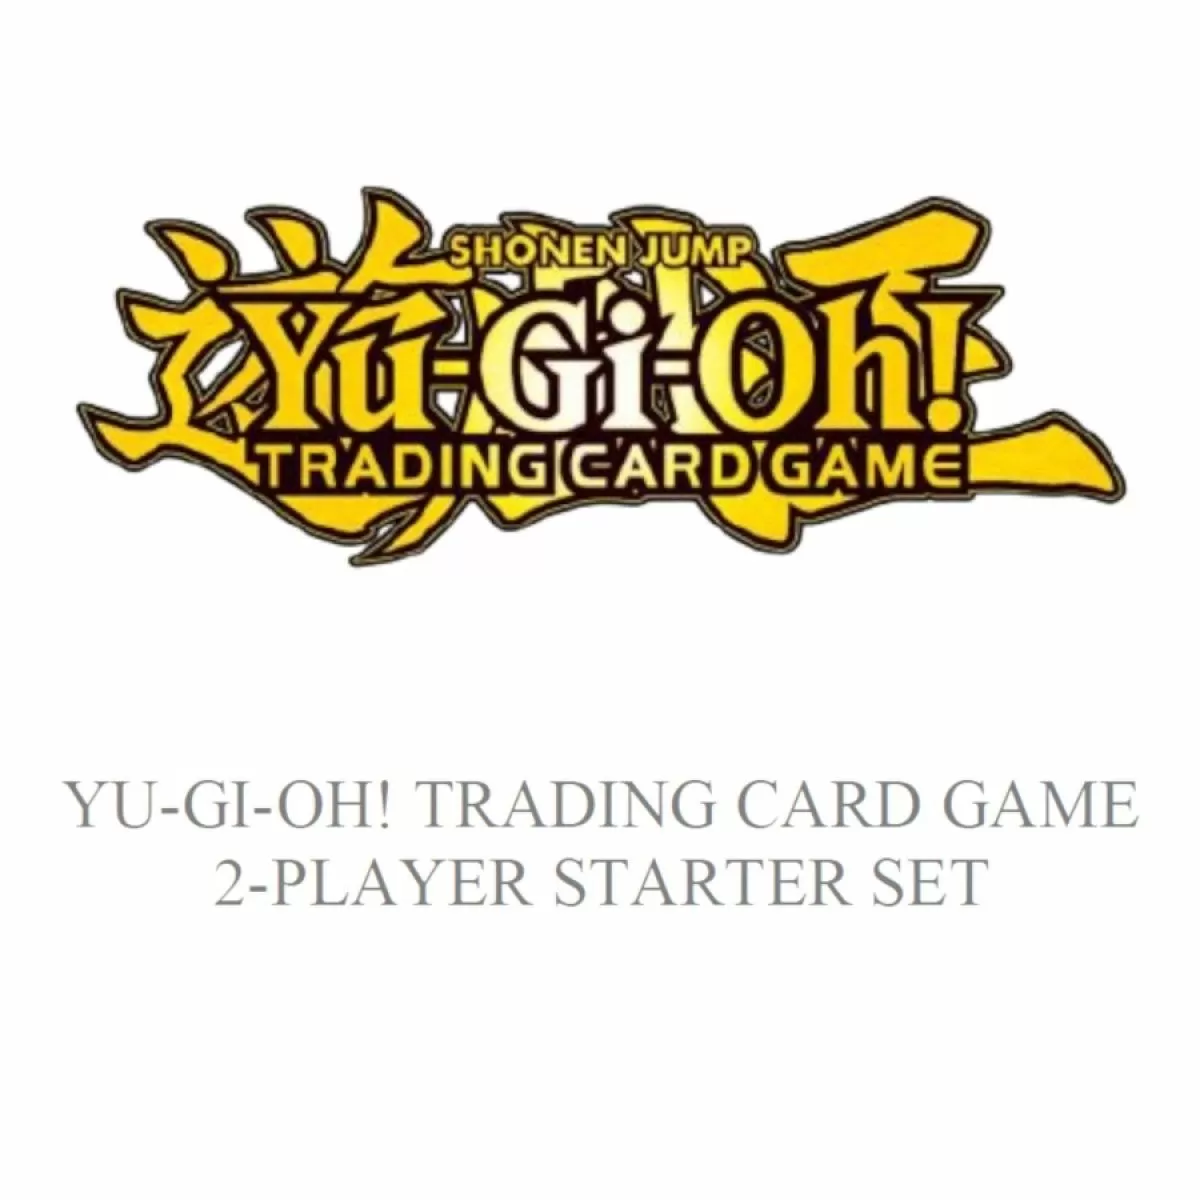 Yugioh - 2-Player Starter Set Display [::] Let's Play Games